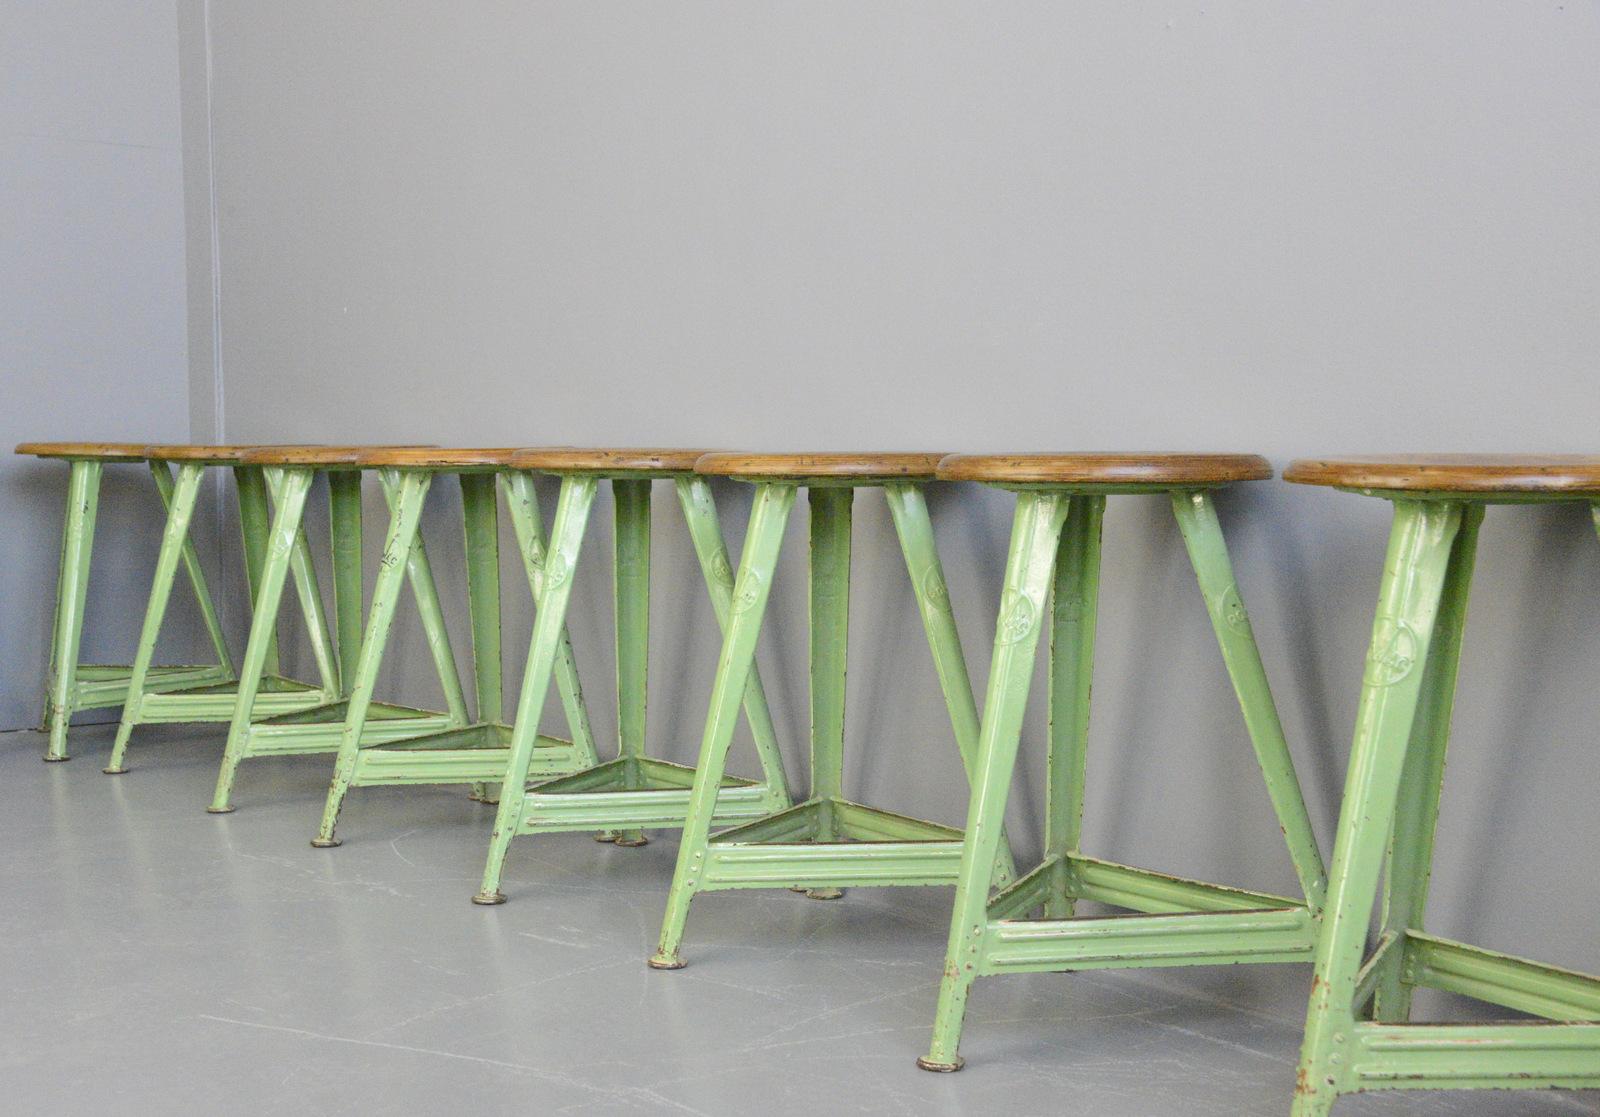 Art Studio stools by Rowac, Circa 1930s.

- Original green paint
- Branded 